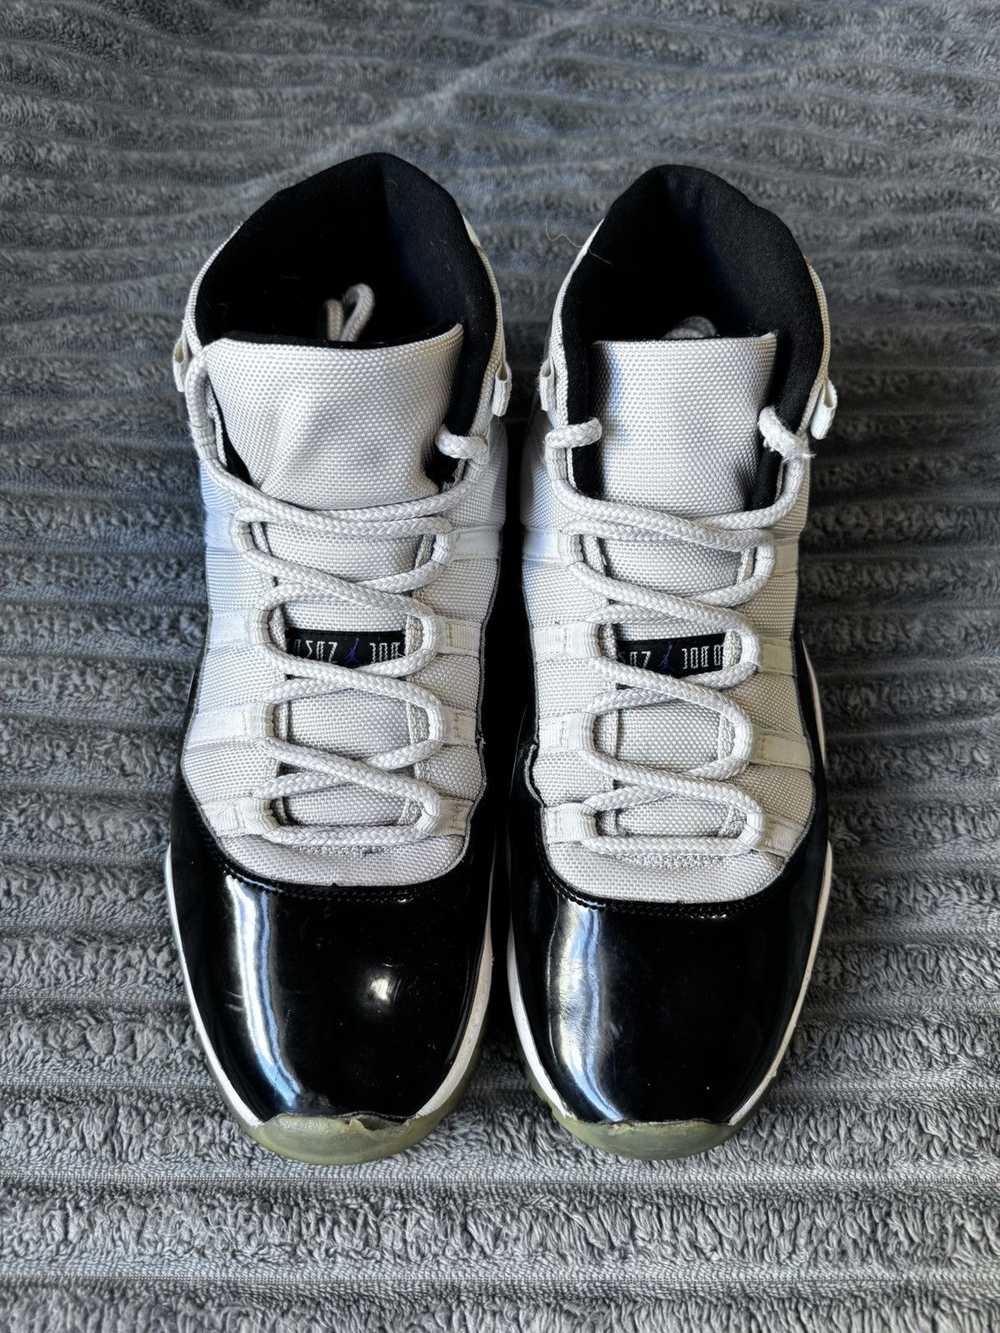 Jordan Brand Jordan 11 "Concord" Size 12 - image 3